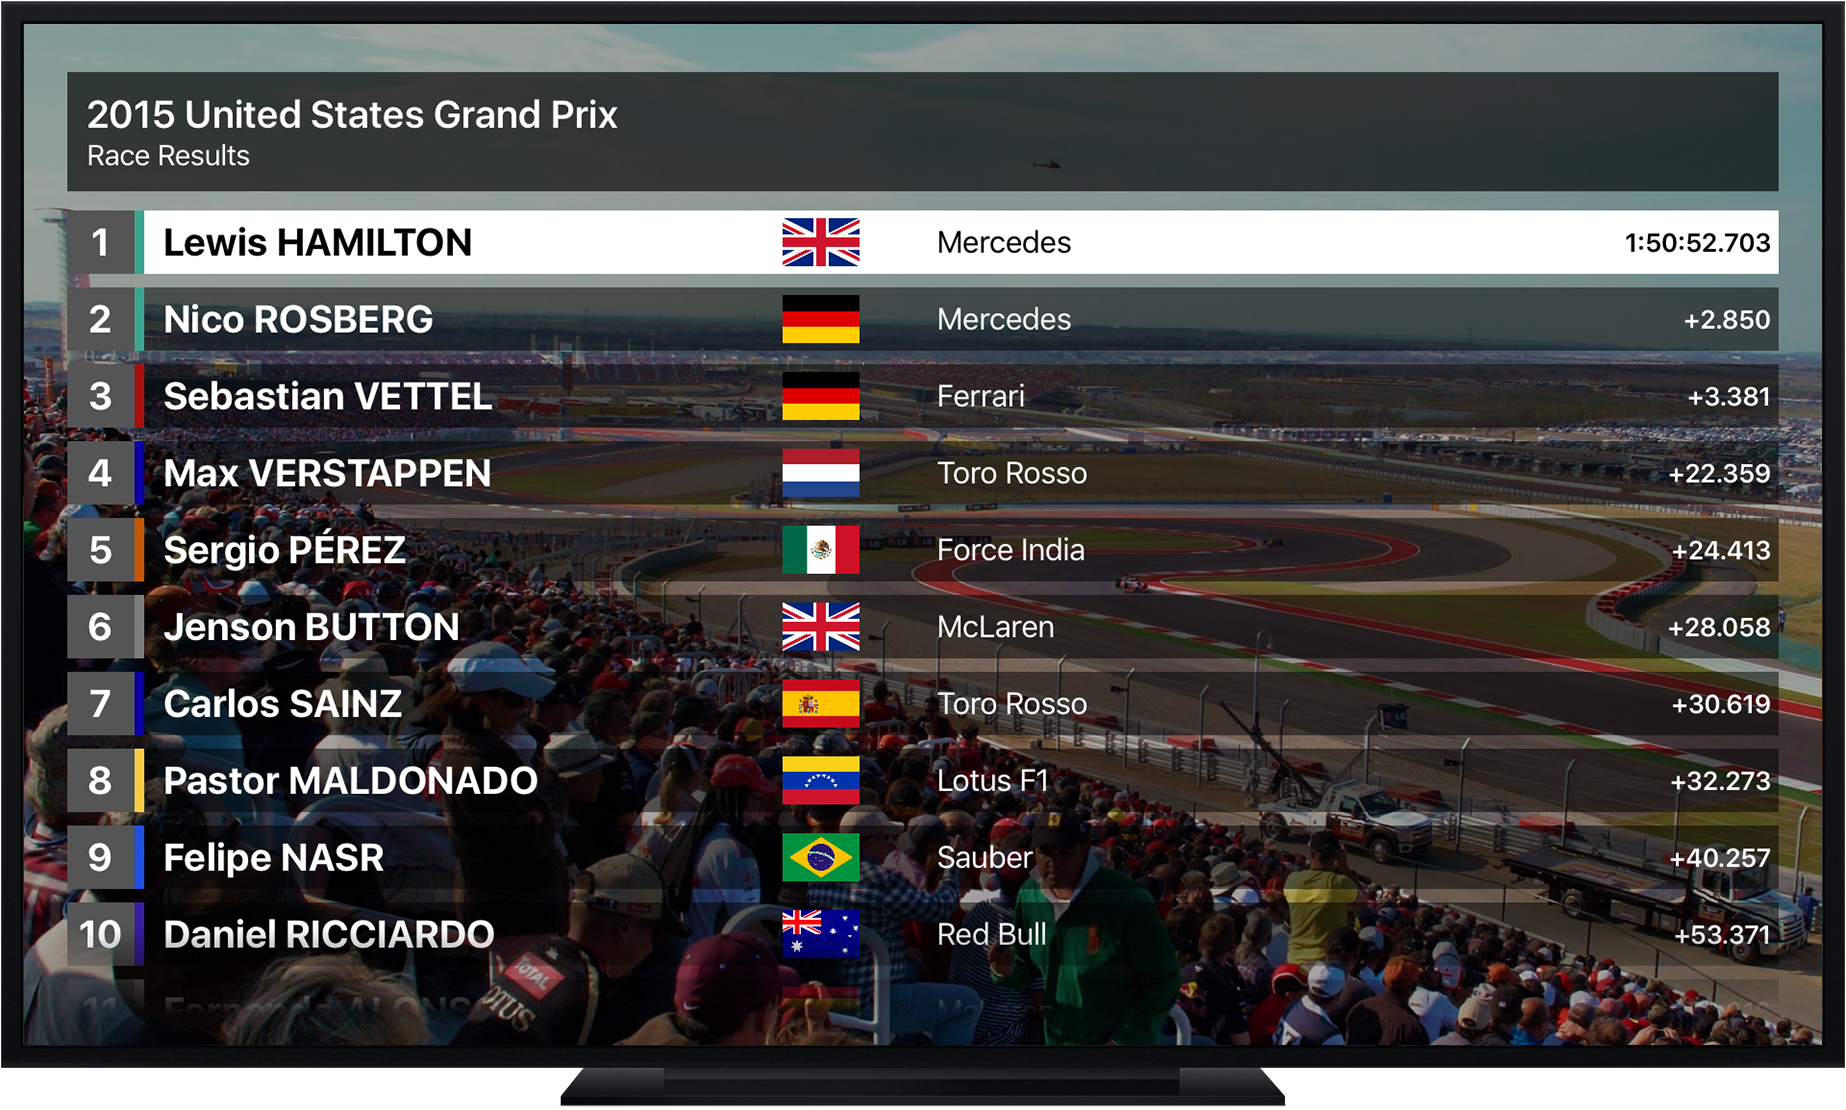 Race Results - Grand Prix Stats